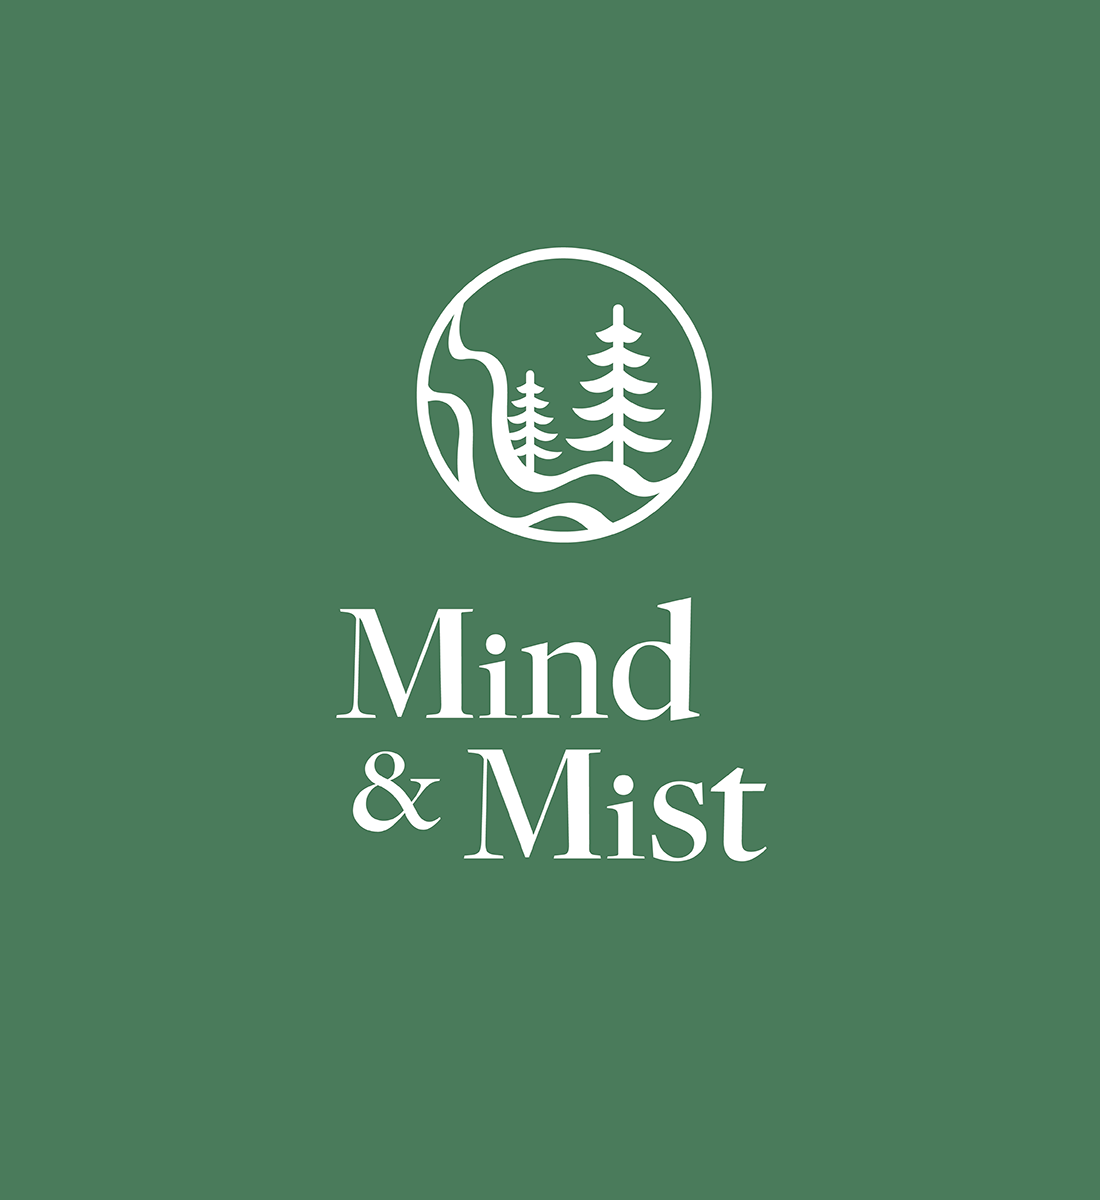 Product Branding - Mind & Mist, Organic Soap - Image 2